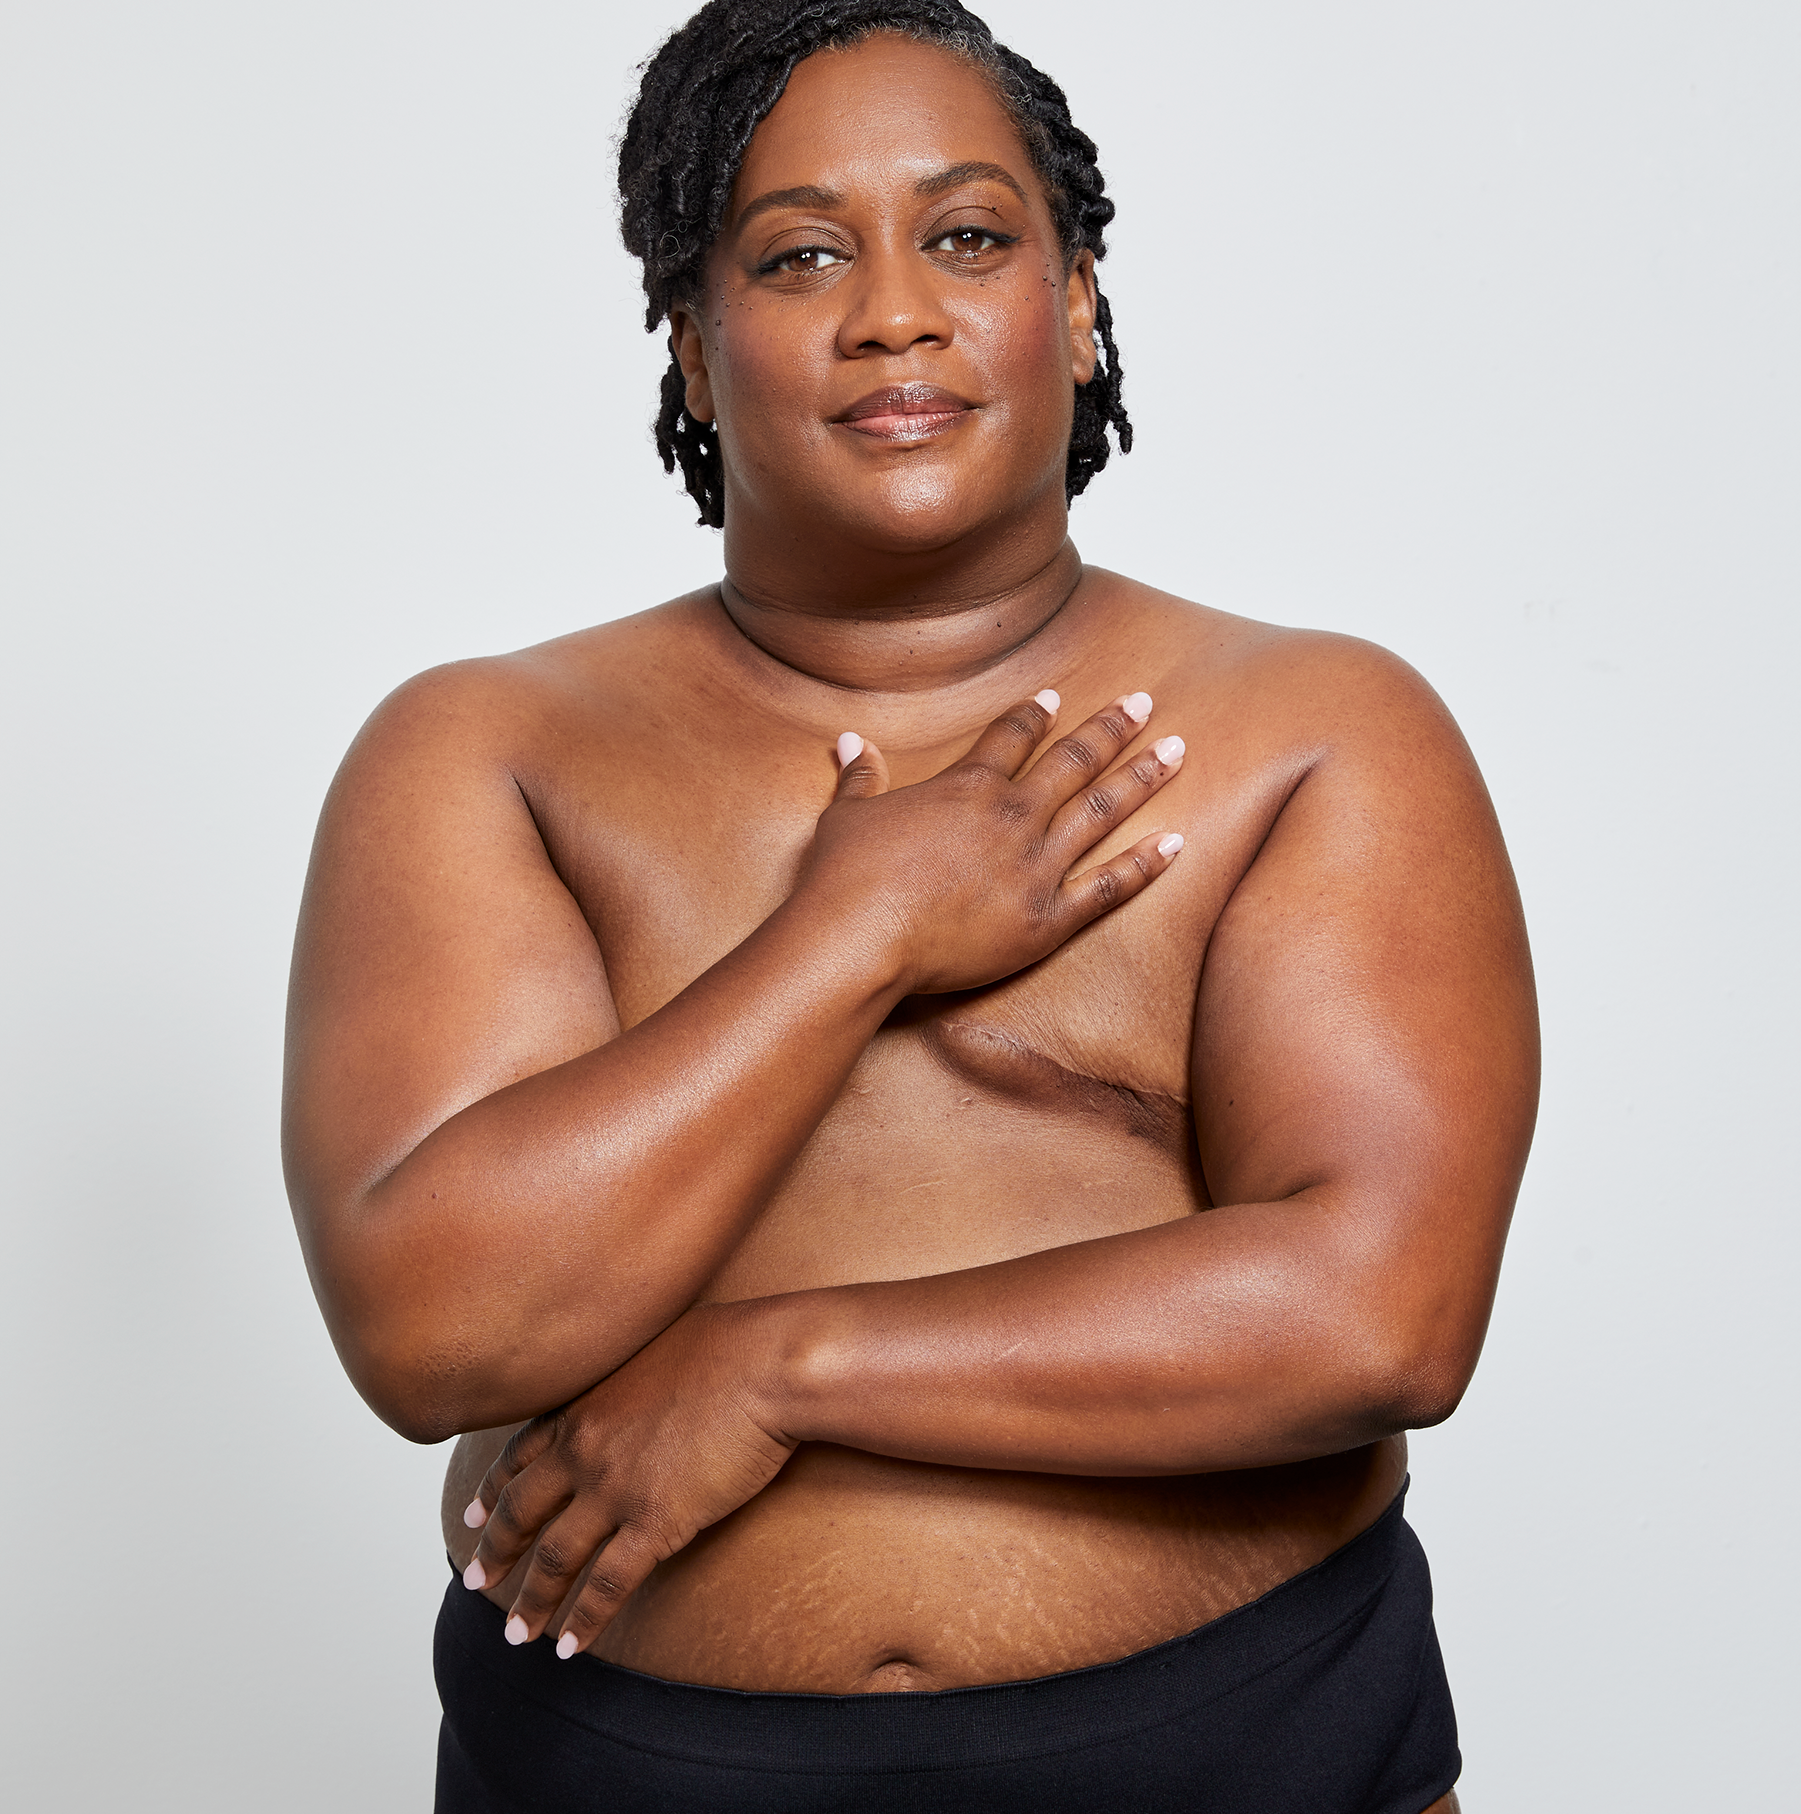 bobby scholar edwards recommends fat black lady sex pic